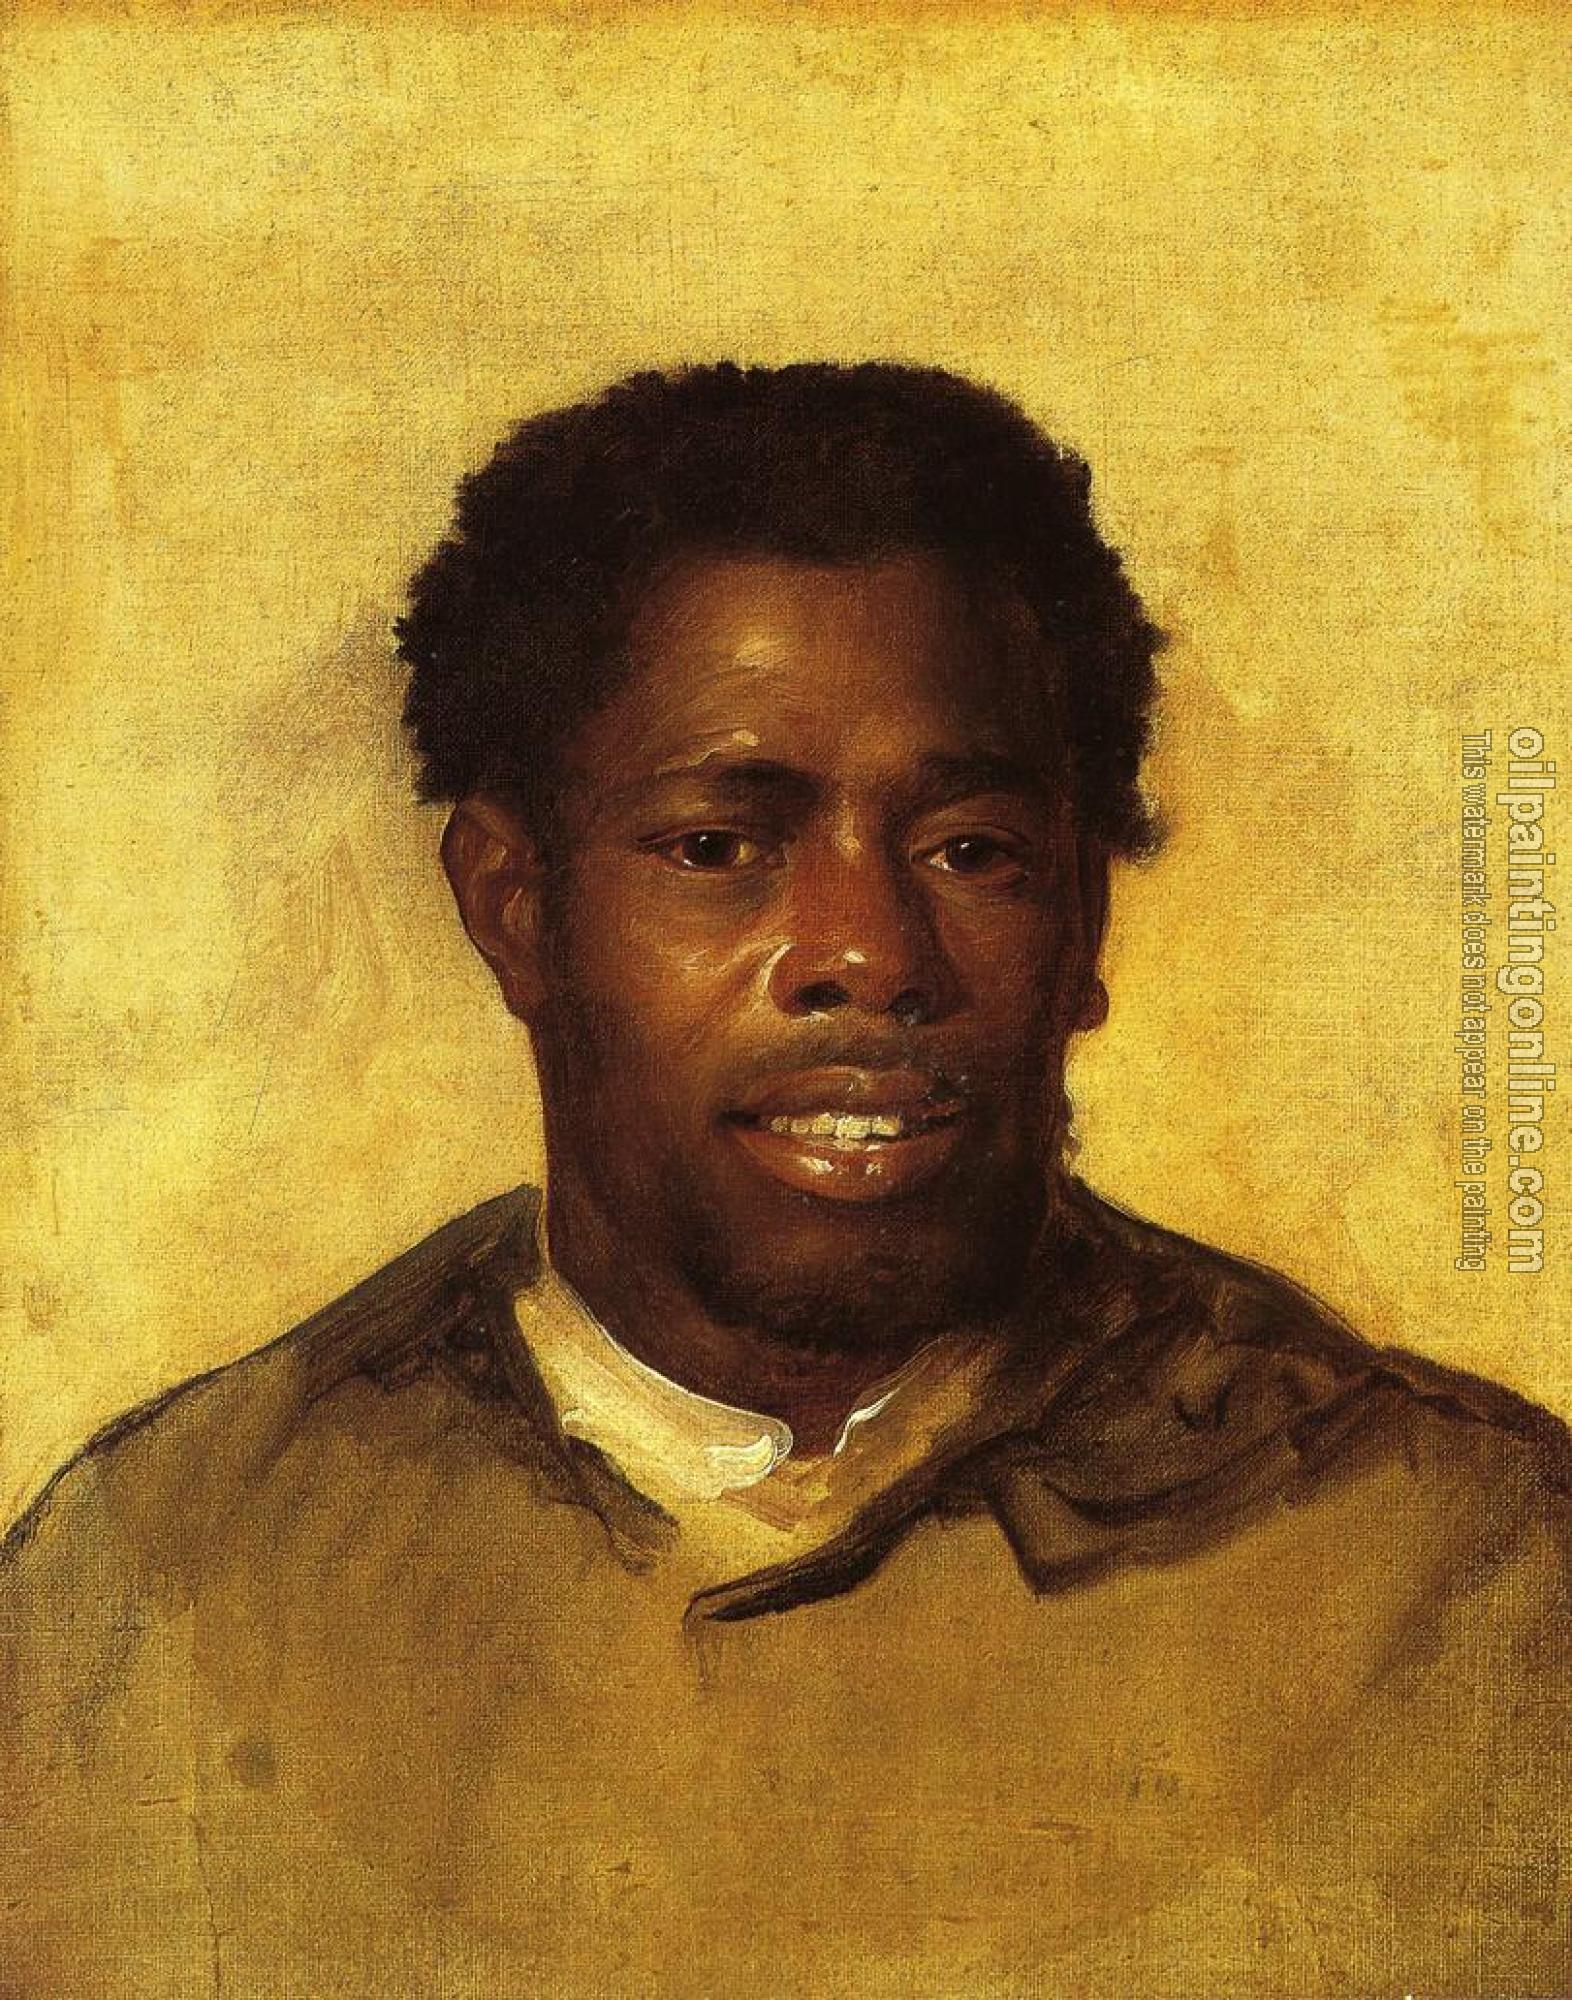 Copley, John Singleton - Head of a Negro